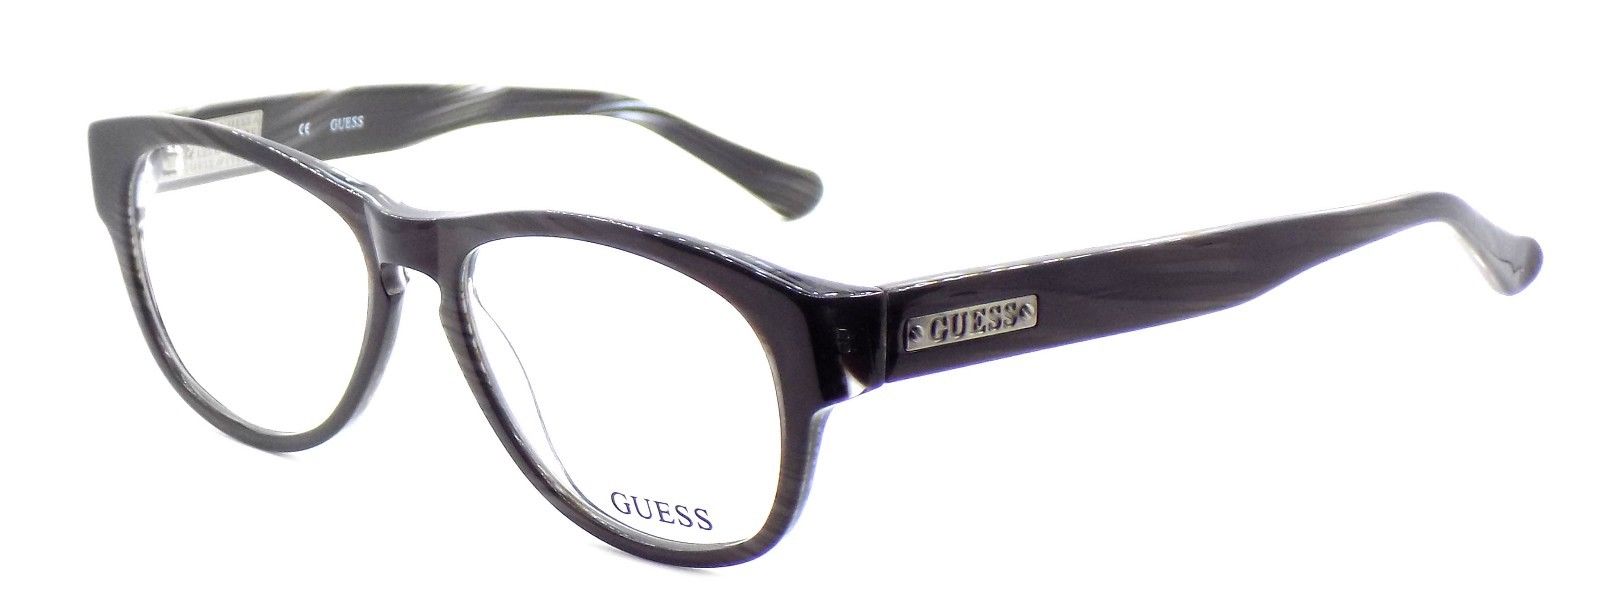 1-GUESS GU1753 GRY Men's Eyeglasses Frames 53-16-140 Gray + CASE-715583550612-IKSpecs